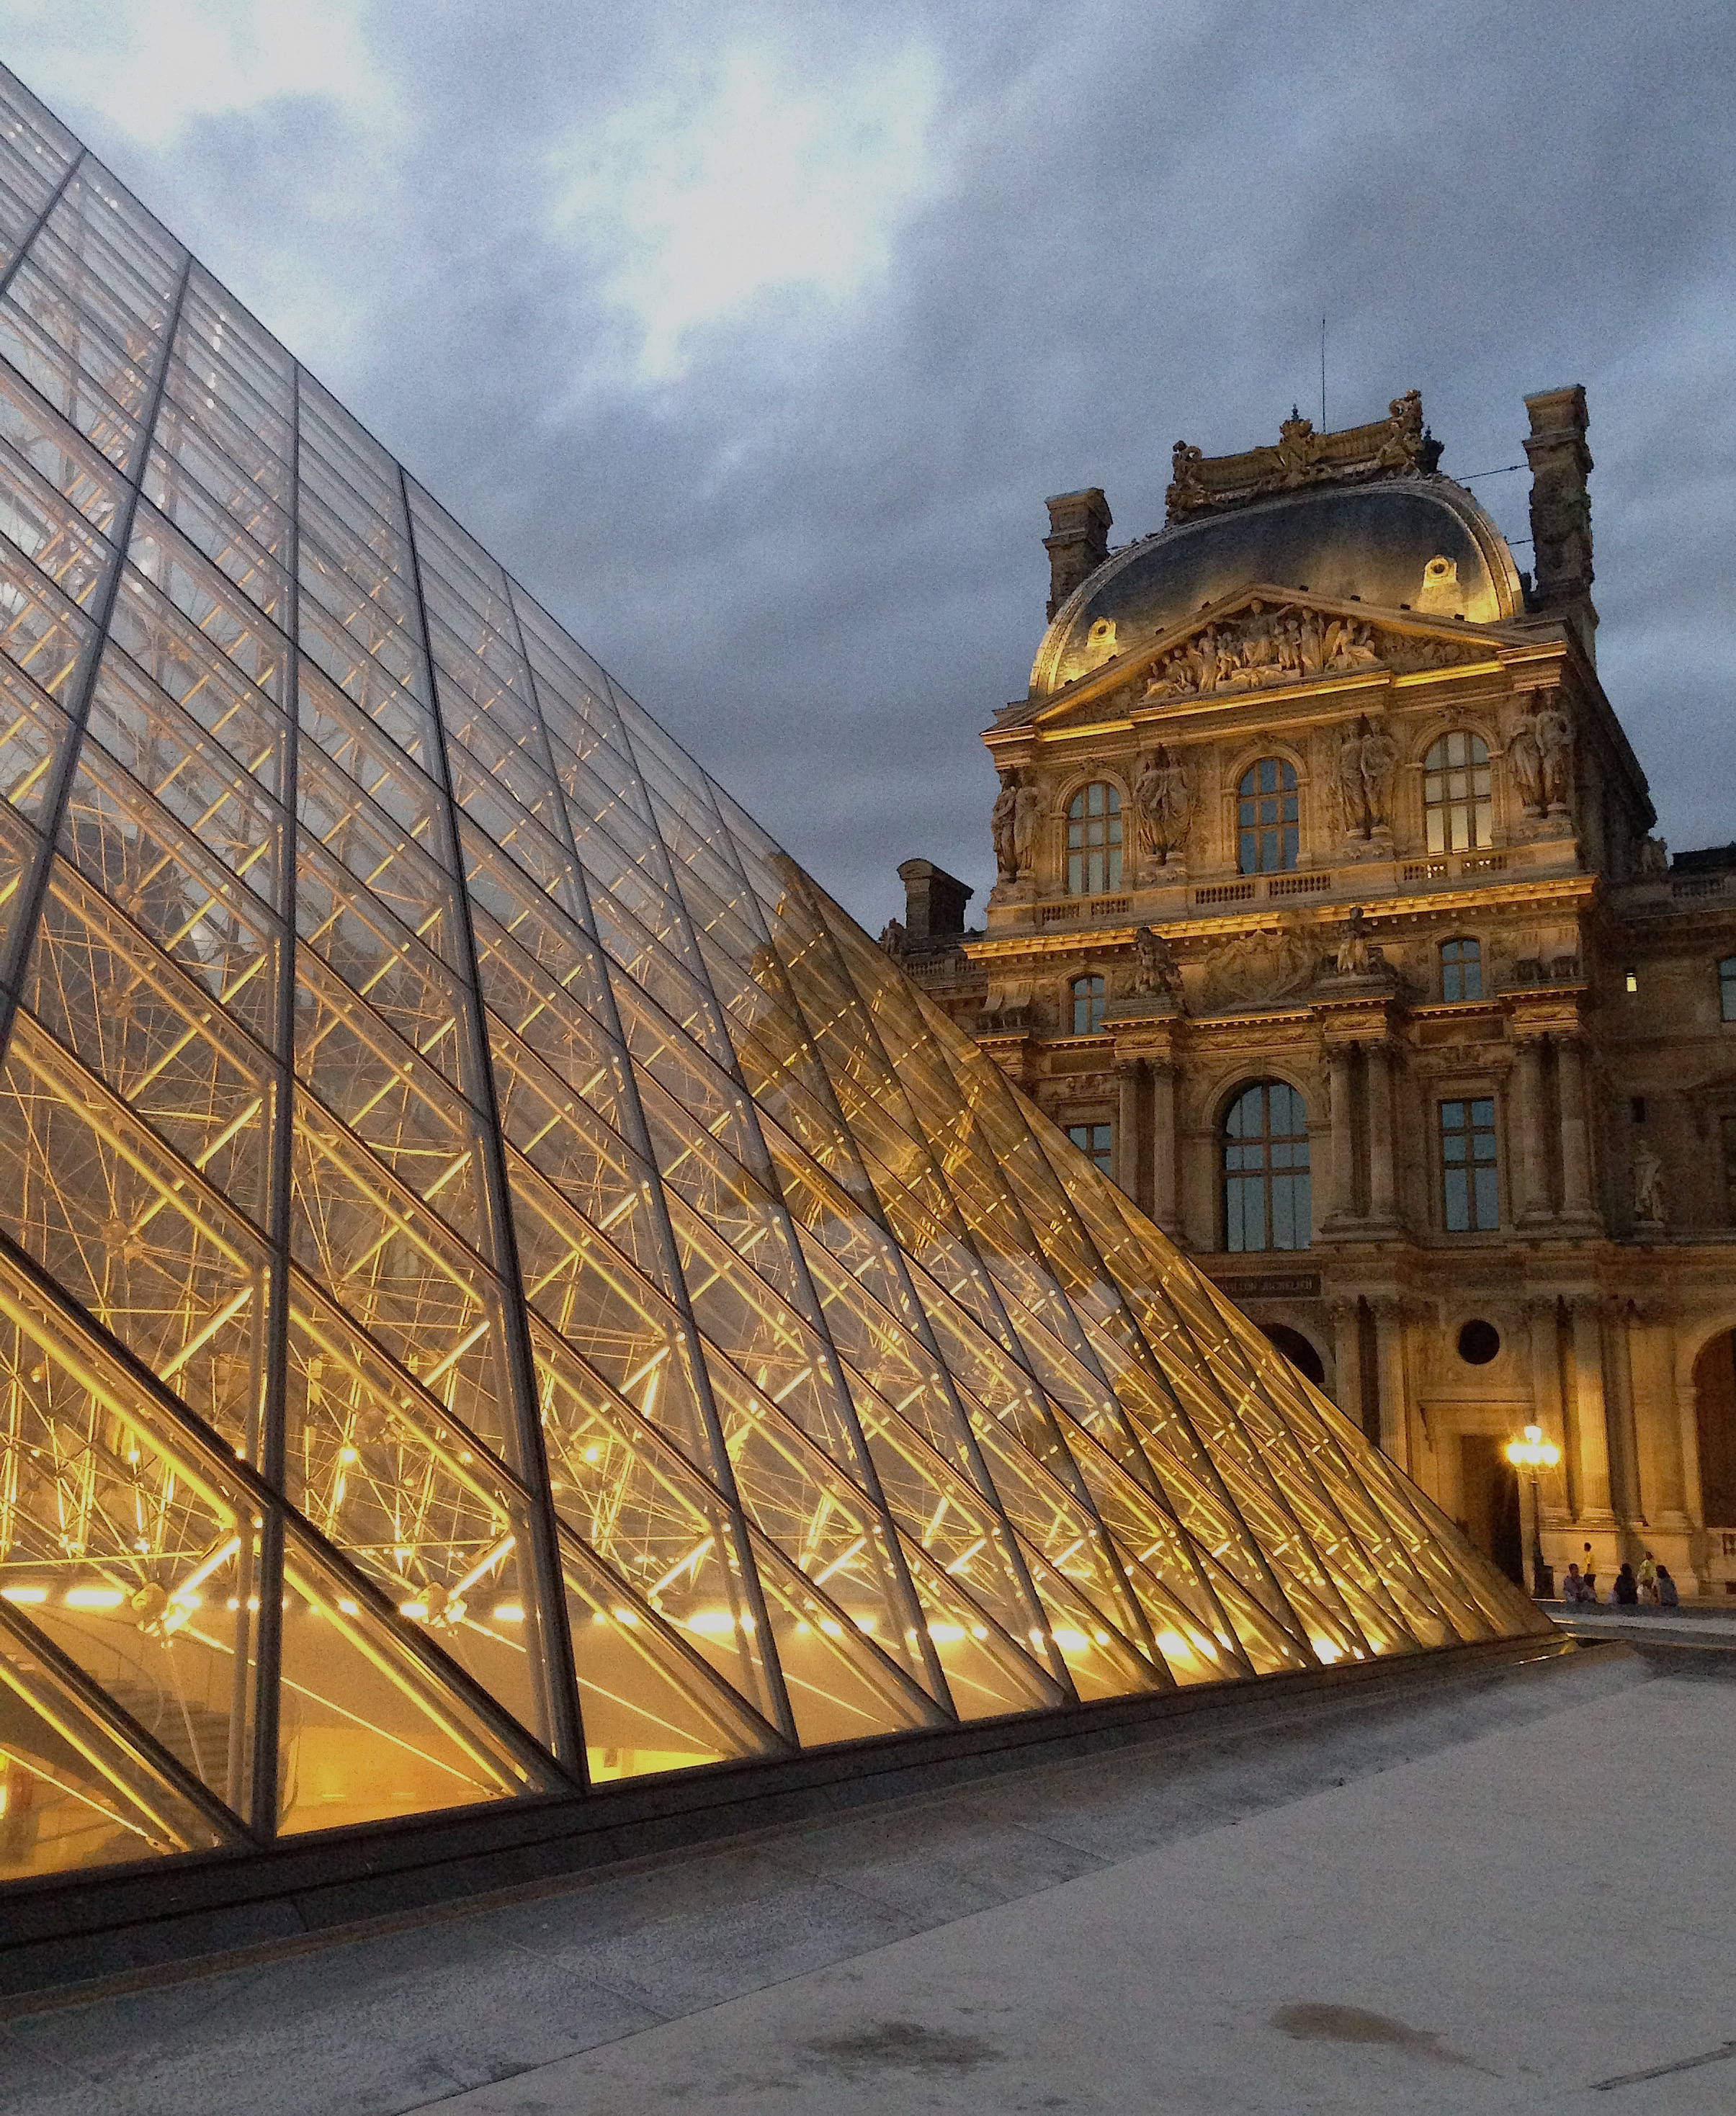 Знаменитый музей в париже. Франция музей Лувр. Музей Louvre, Париж, Франция. Louvre музей.